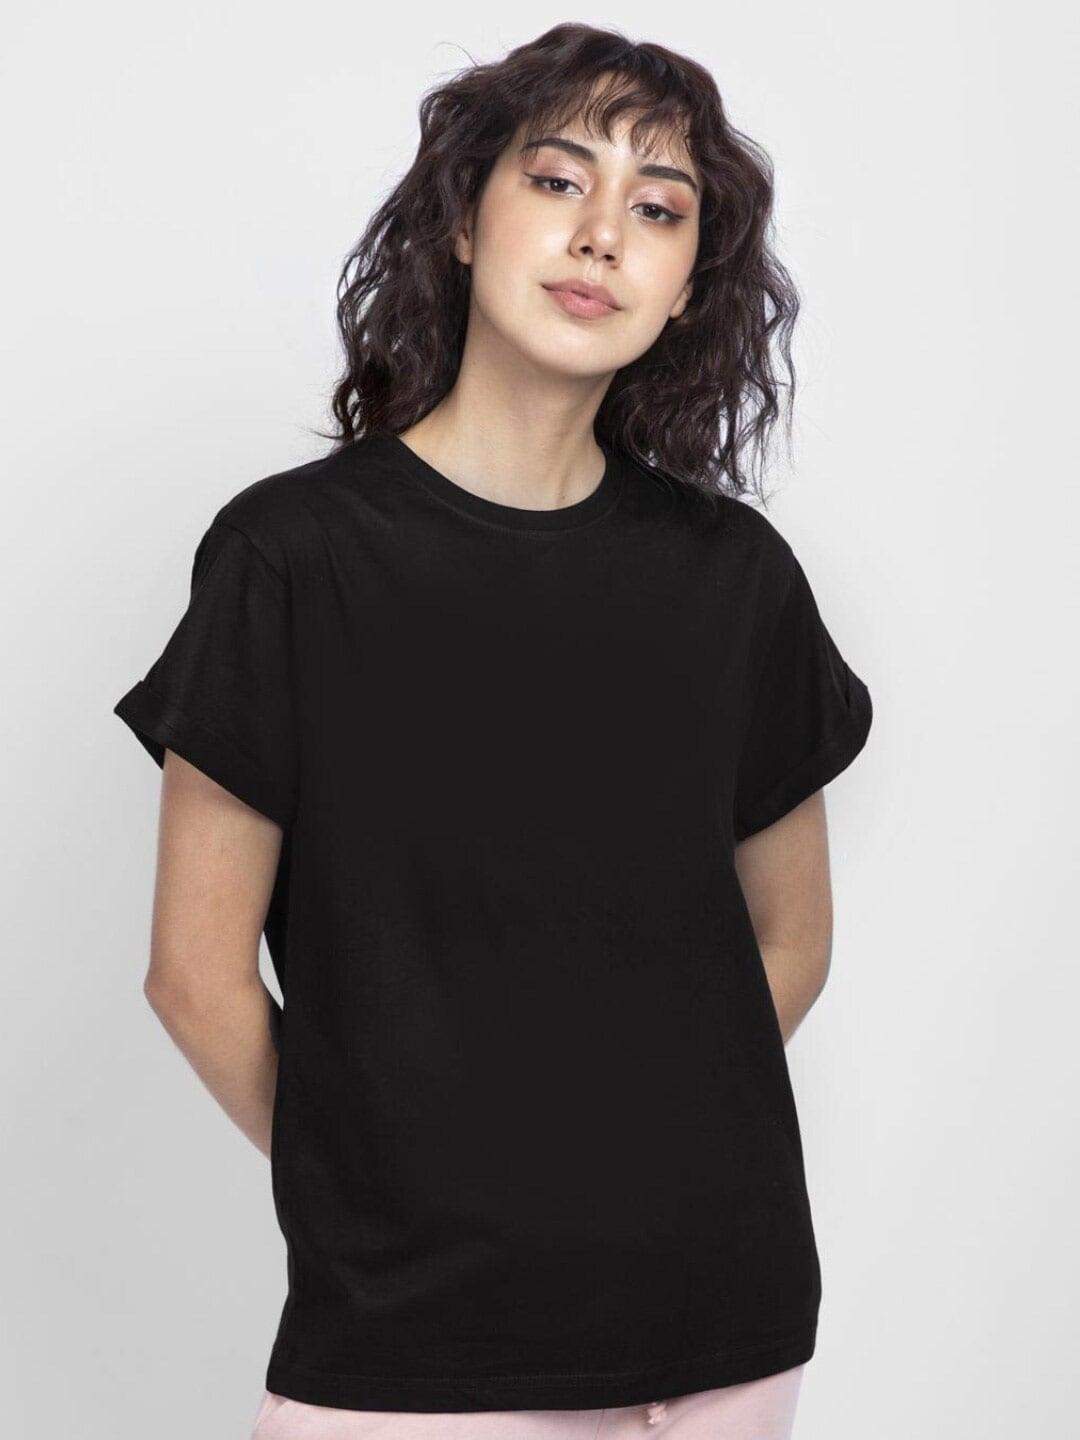 bewakoof-women-black-3-extended-sleeves-t-shirt